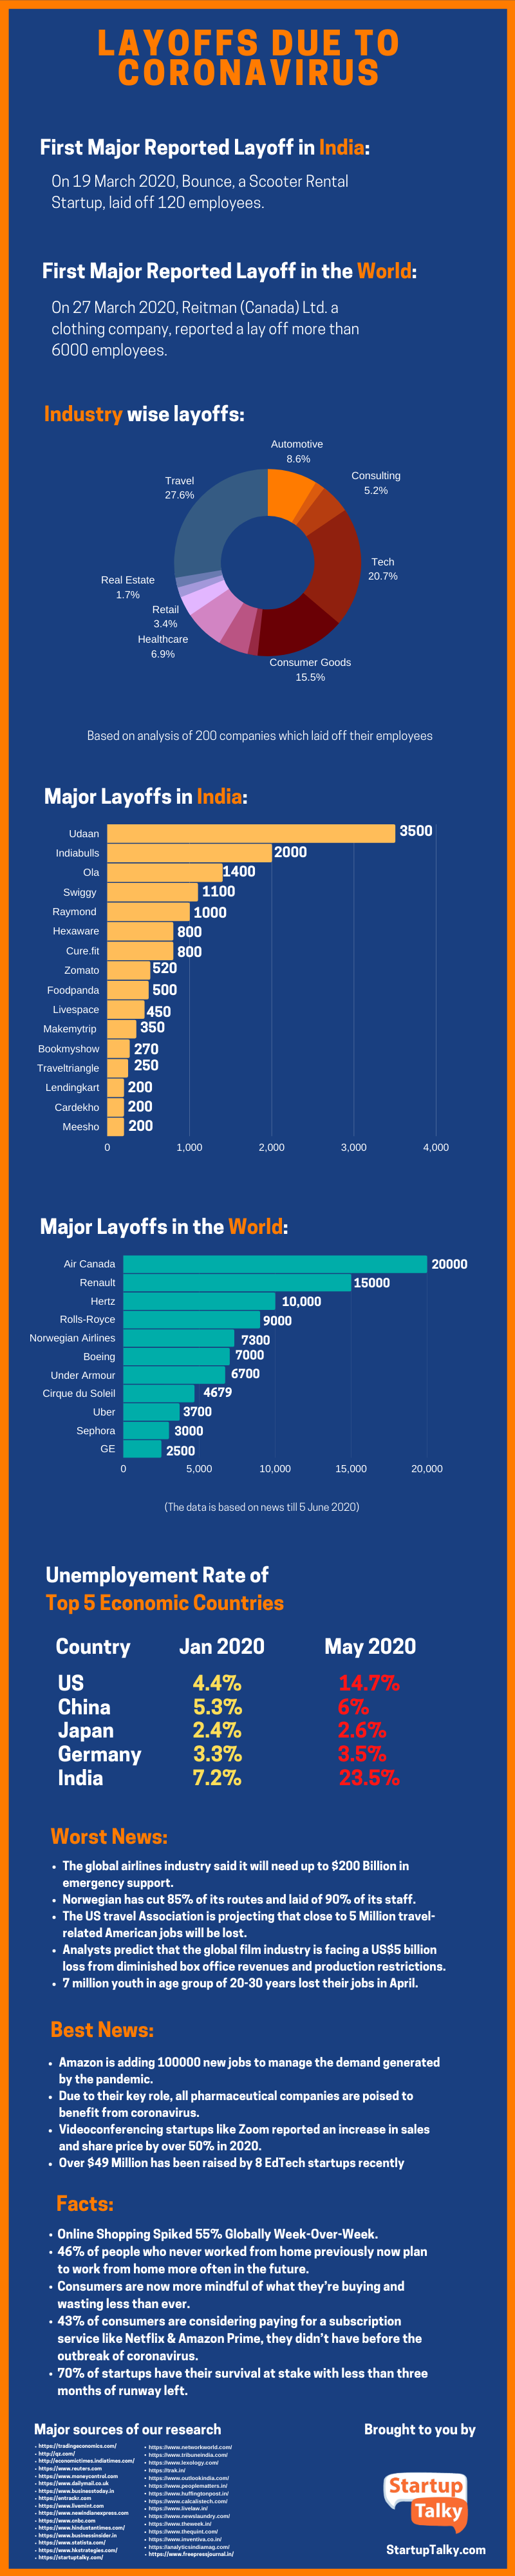 [Infographic] Case Study on Layoffs Due to Coronavirus